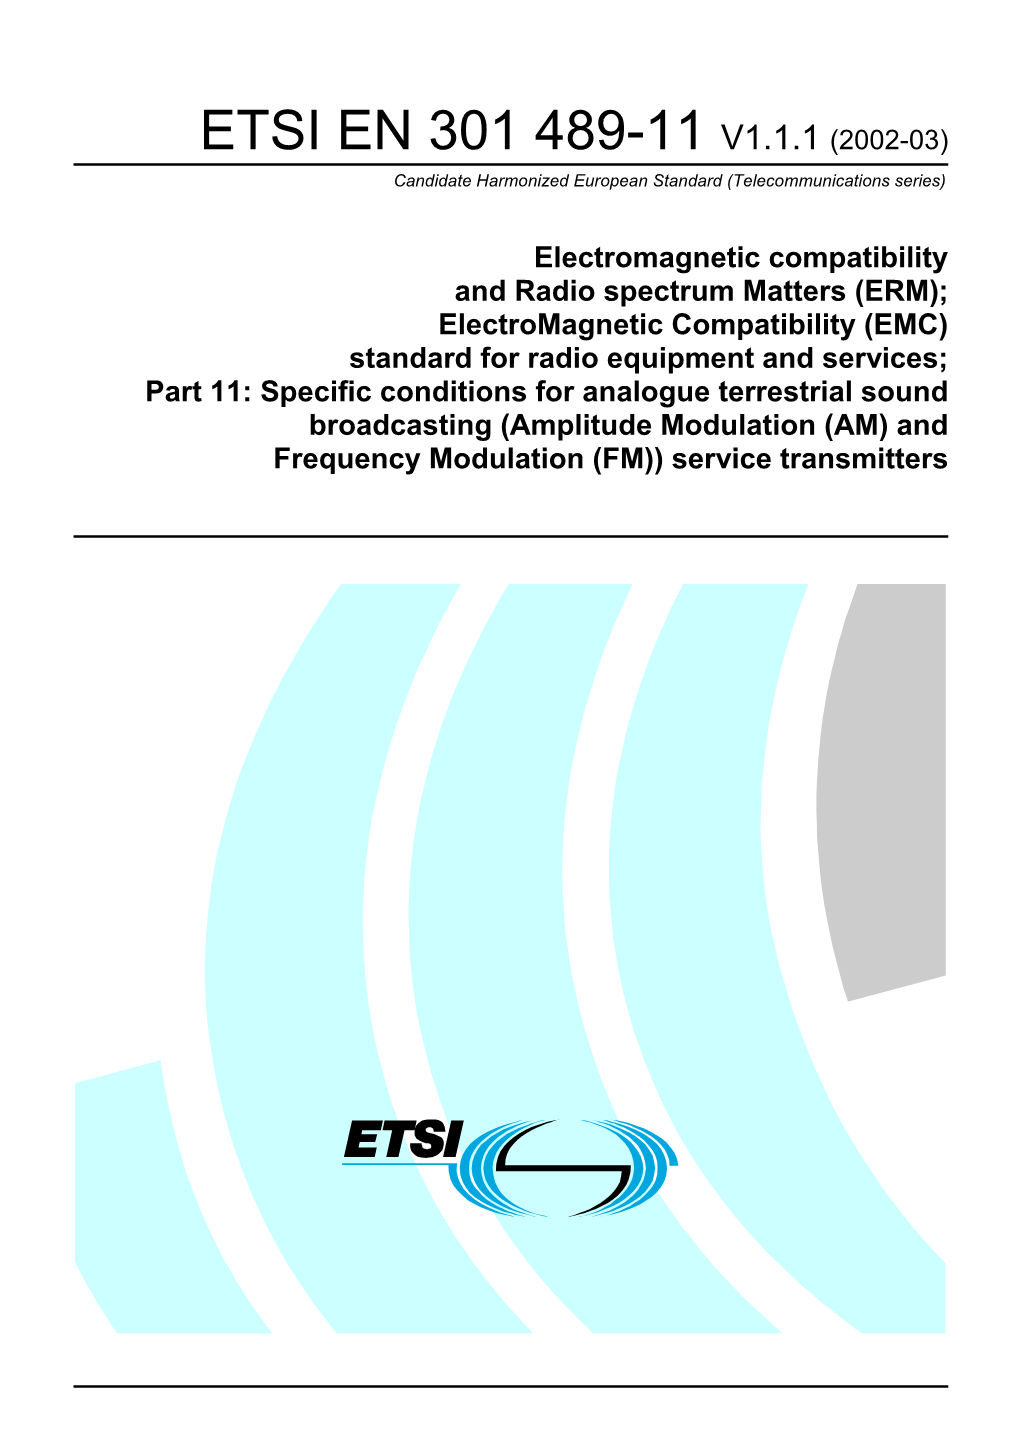 EN 301 489-11 V1.1.1 (2002-03) Candidate Harmonized European Standard (Telecommunications Series)